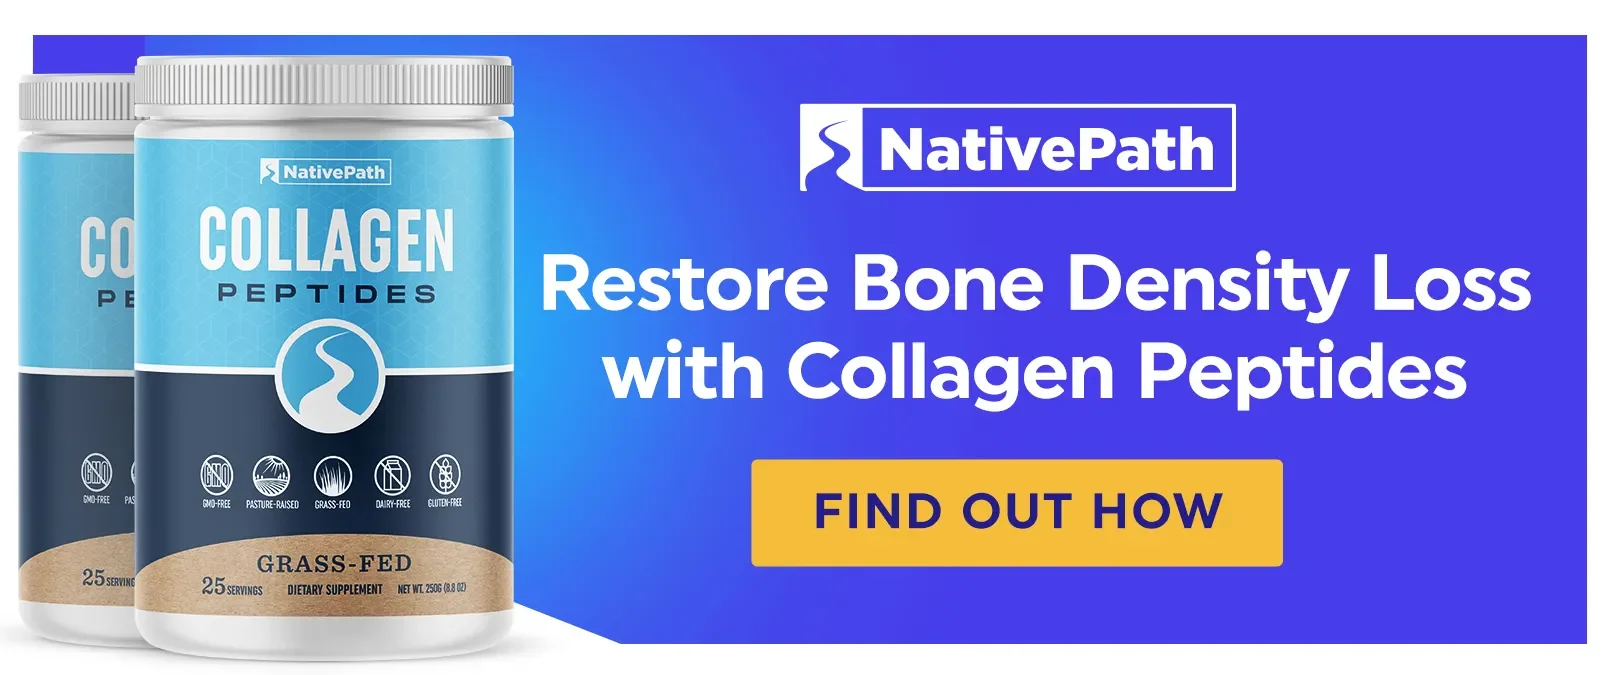 NativePath Collagen Peptides to Restore Bone Density Loss